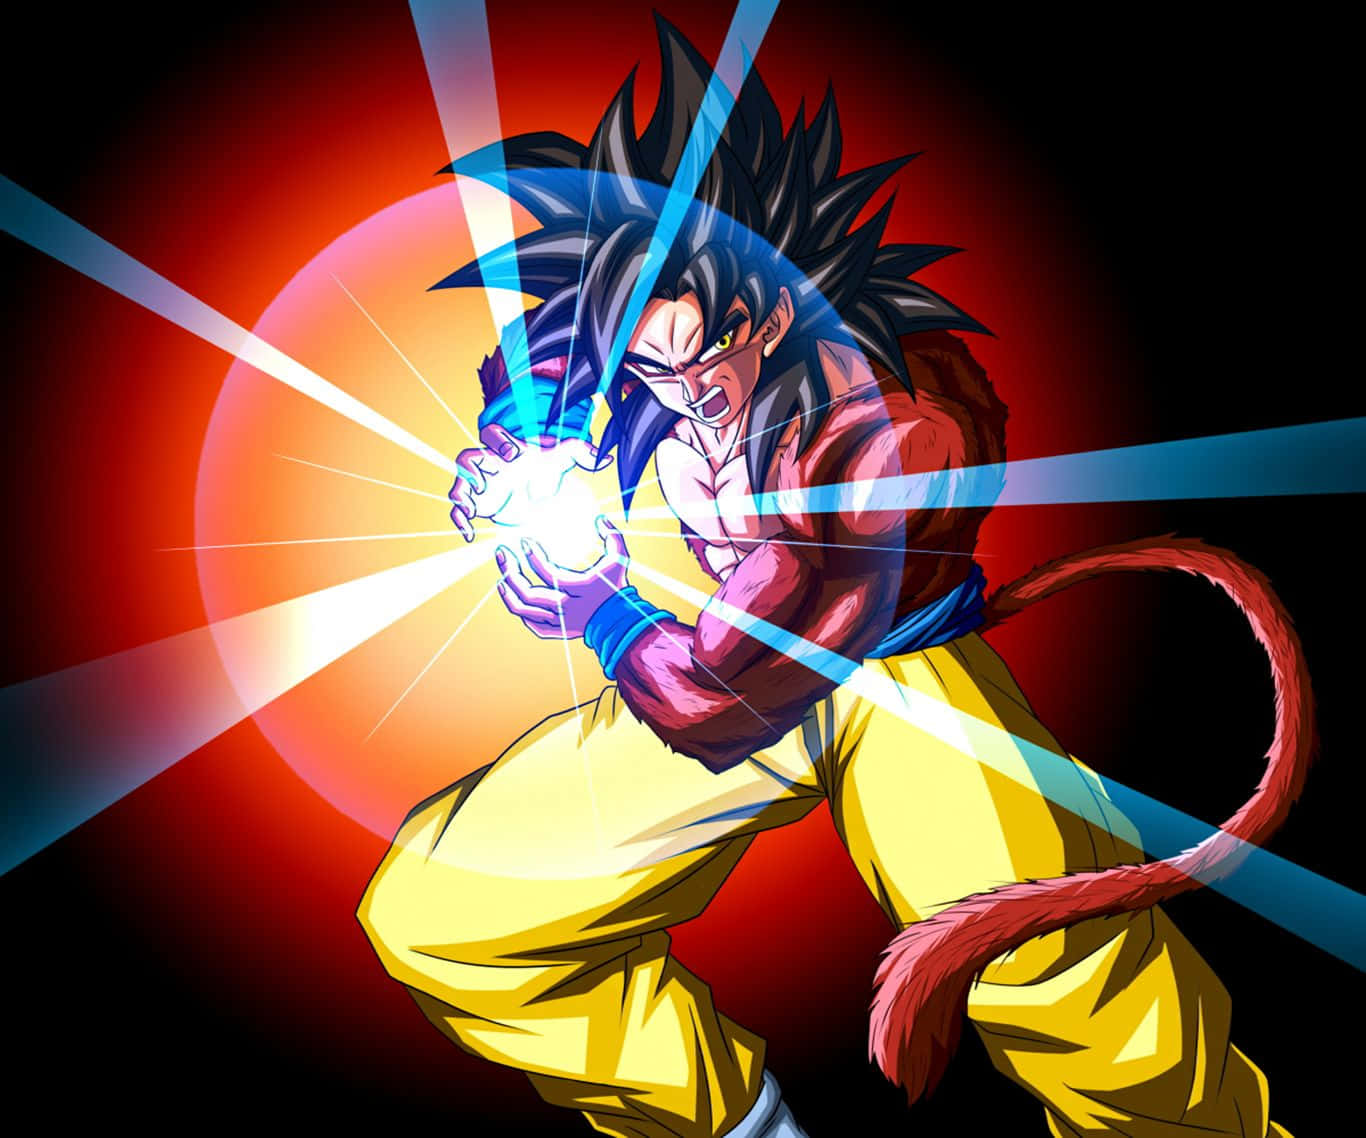 Super Saiyan God Goku IV reaching a new power level Wallpaper